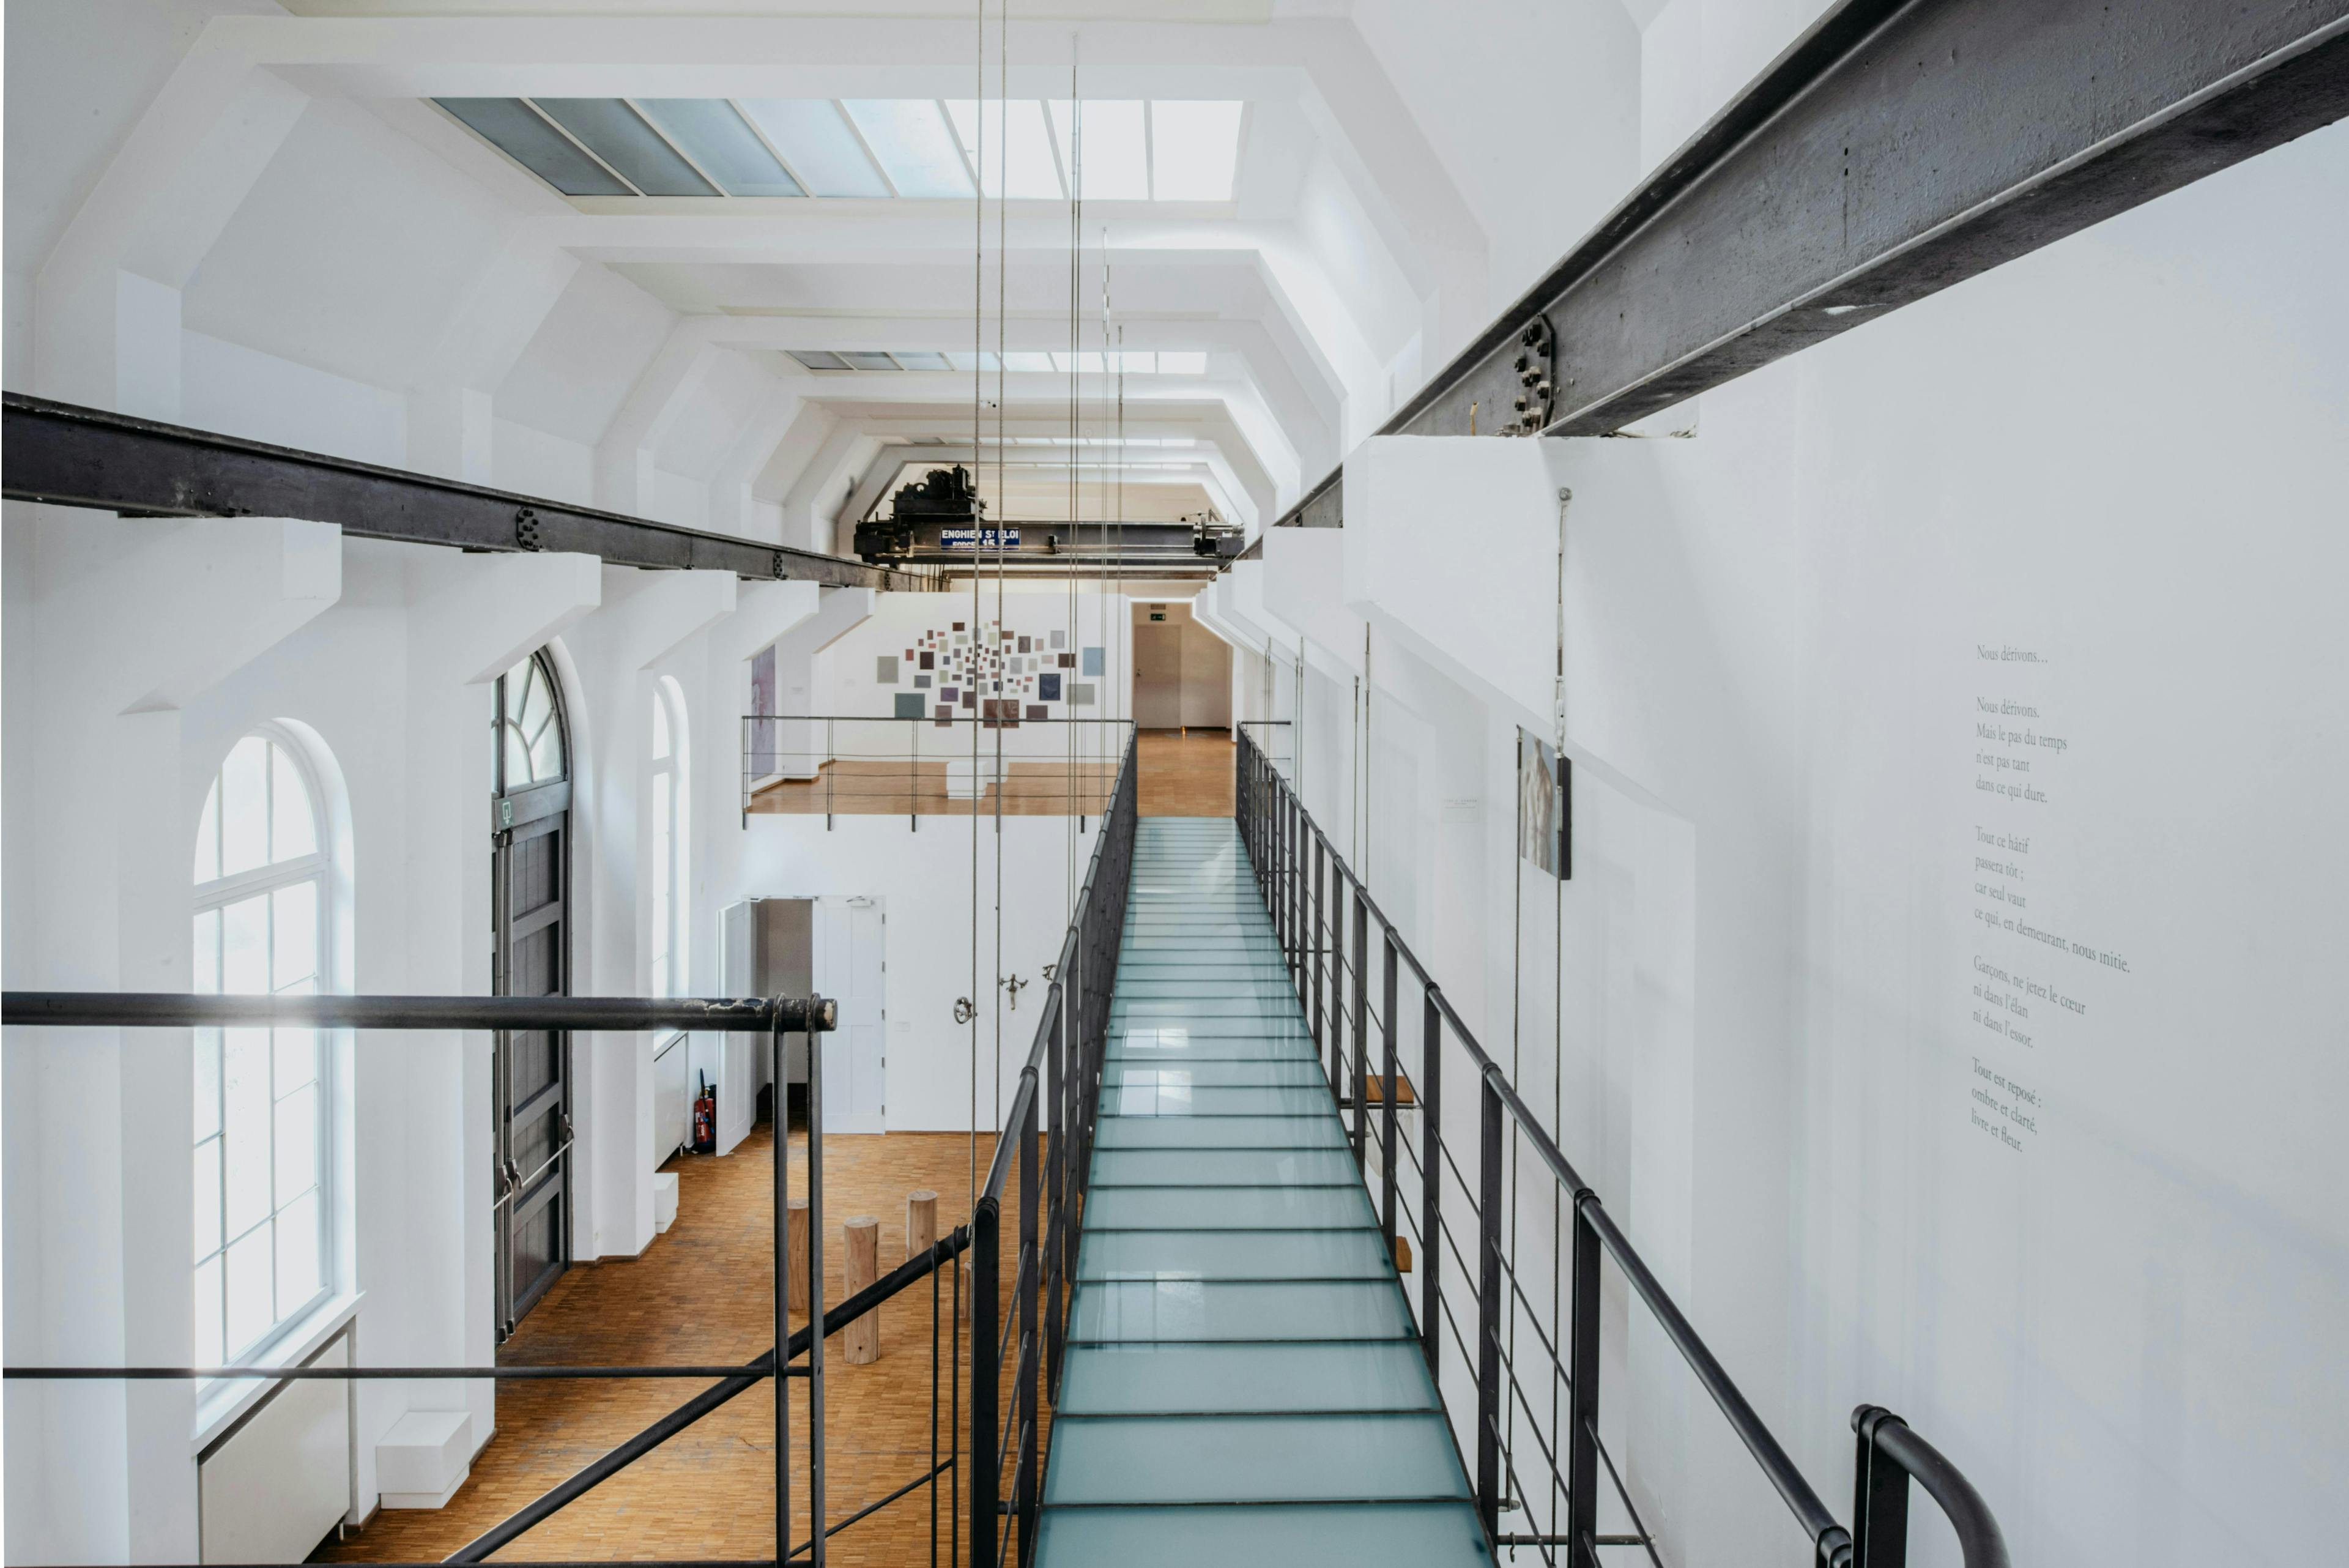 handrail banister corridor railing staircase